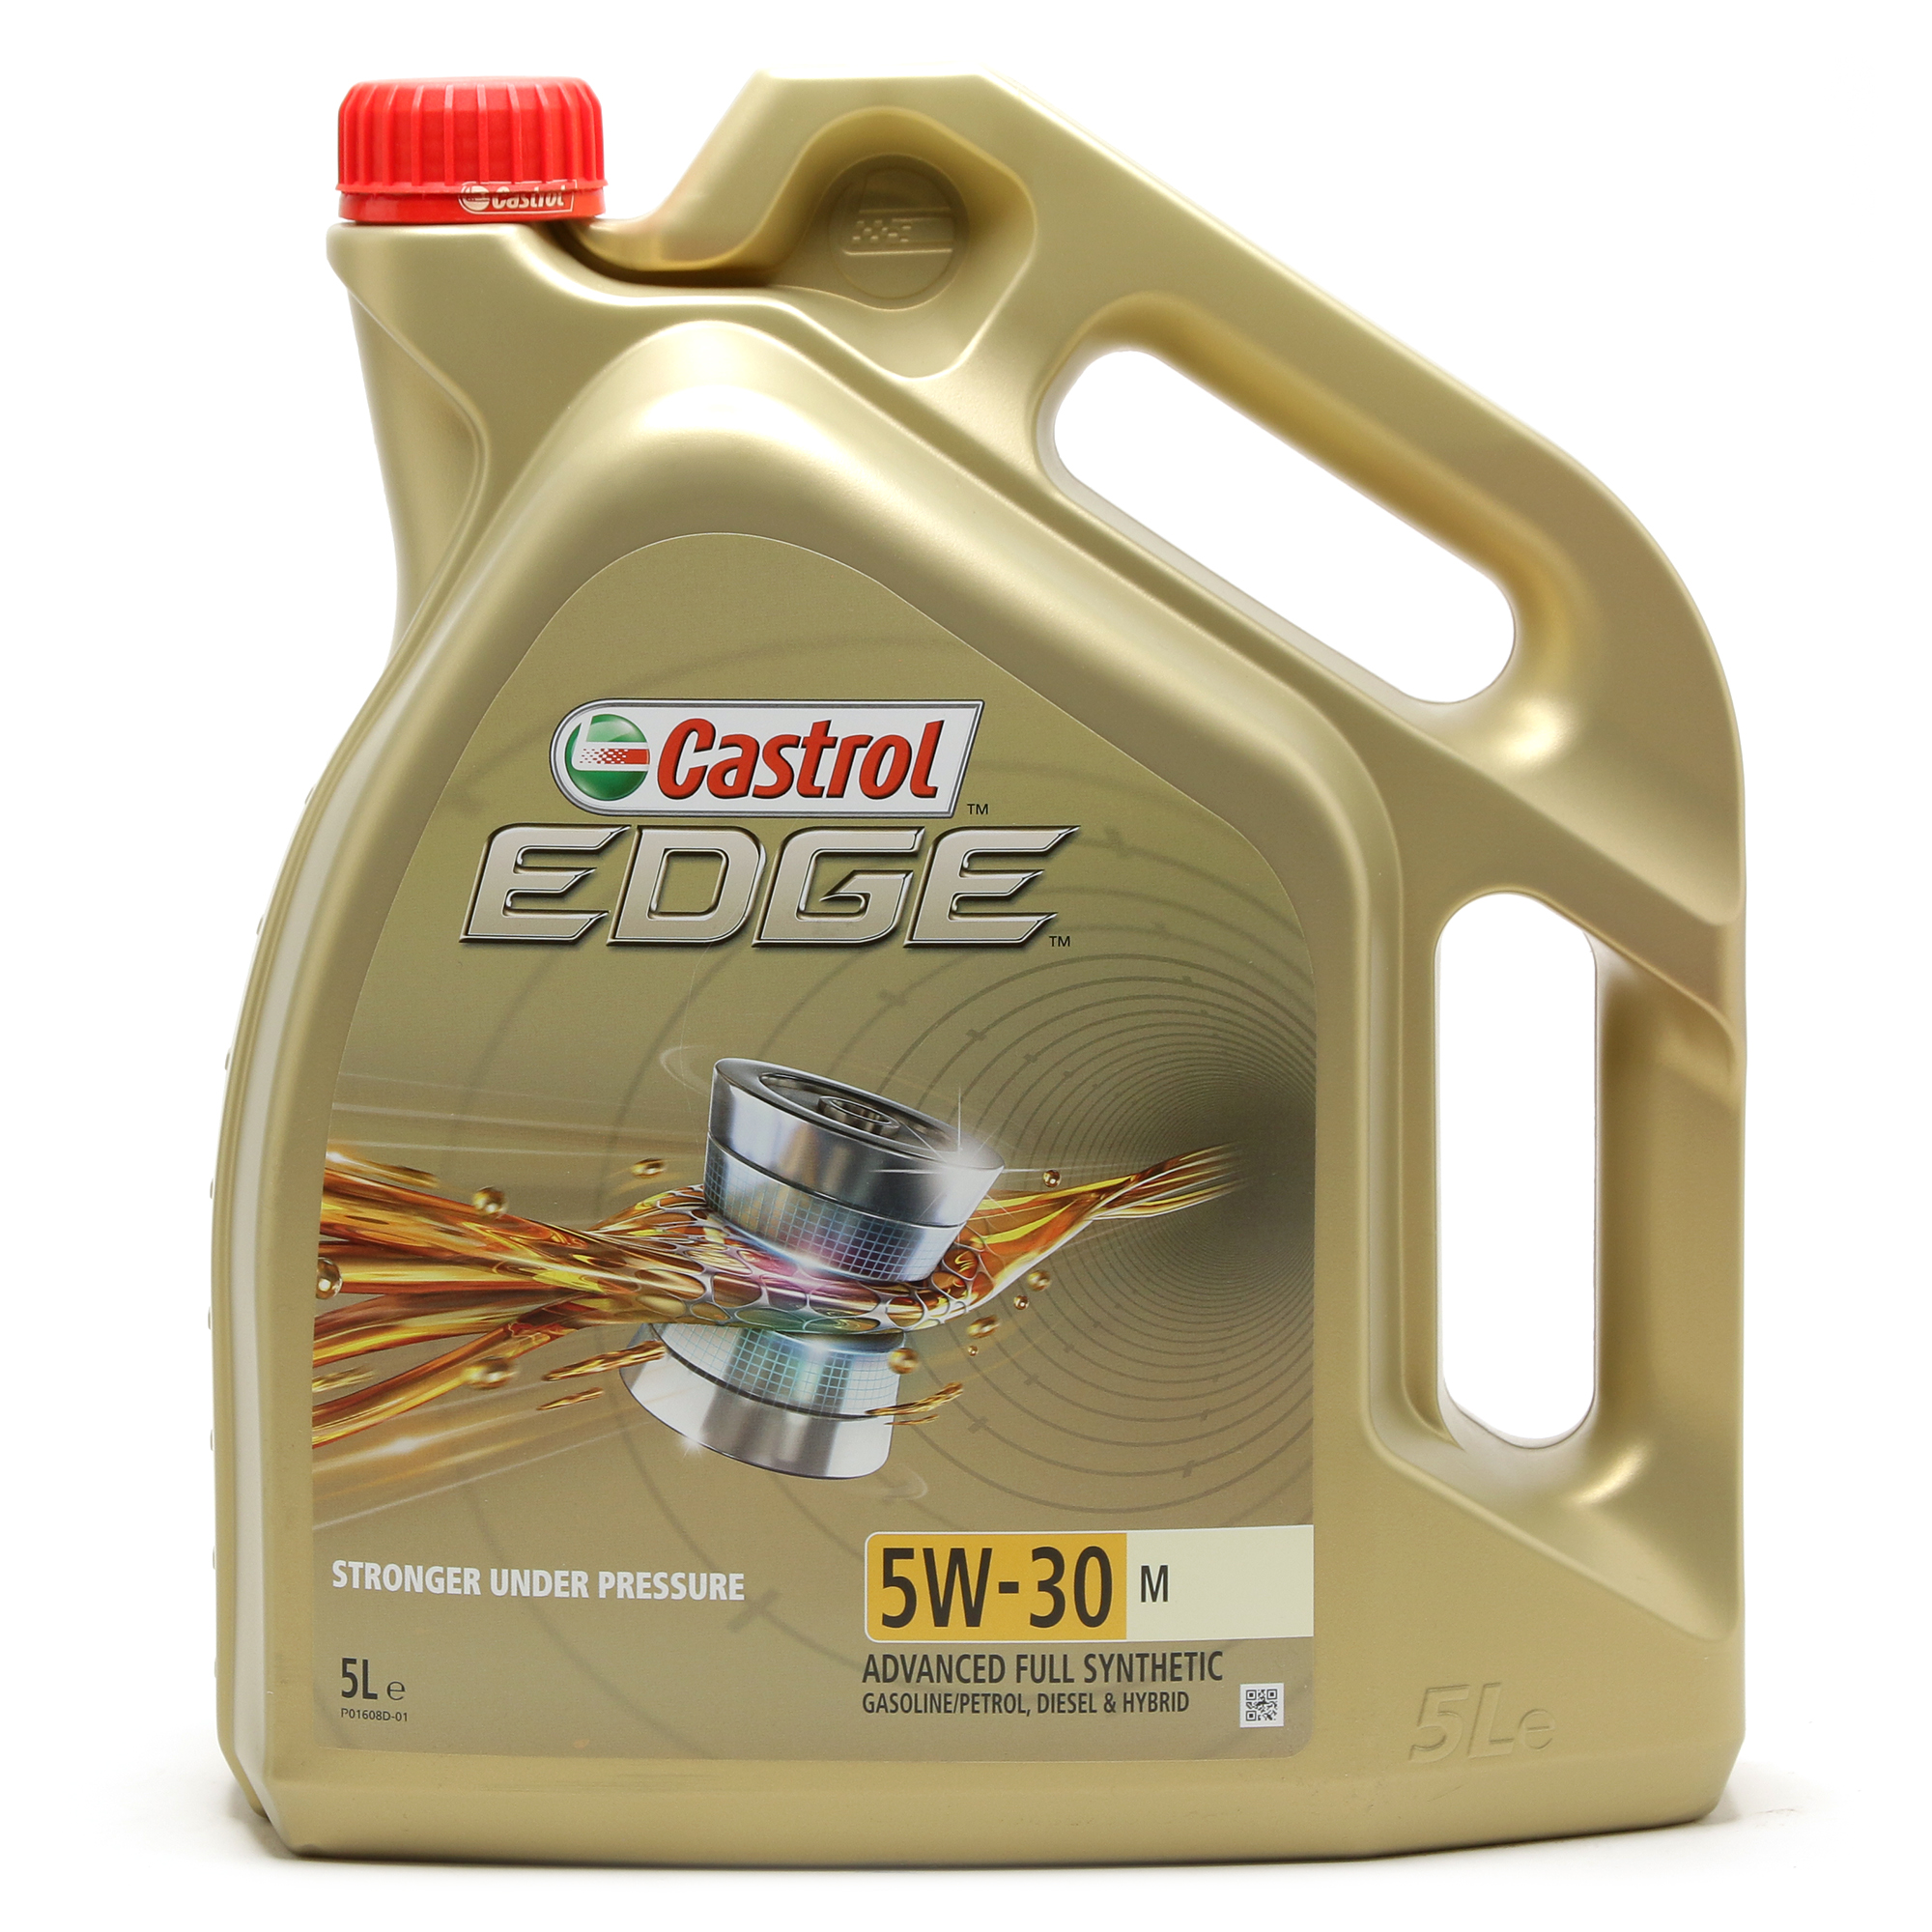 Castrol Edge 5W-30 M (BMW LL04 + MB 229.52) Motoröl 5l - SAE 5W-30